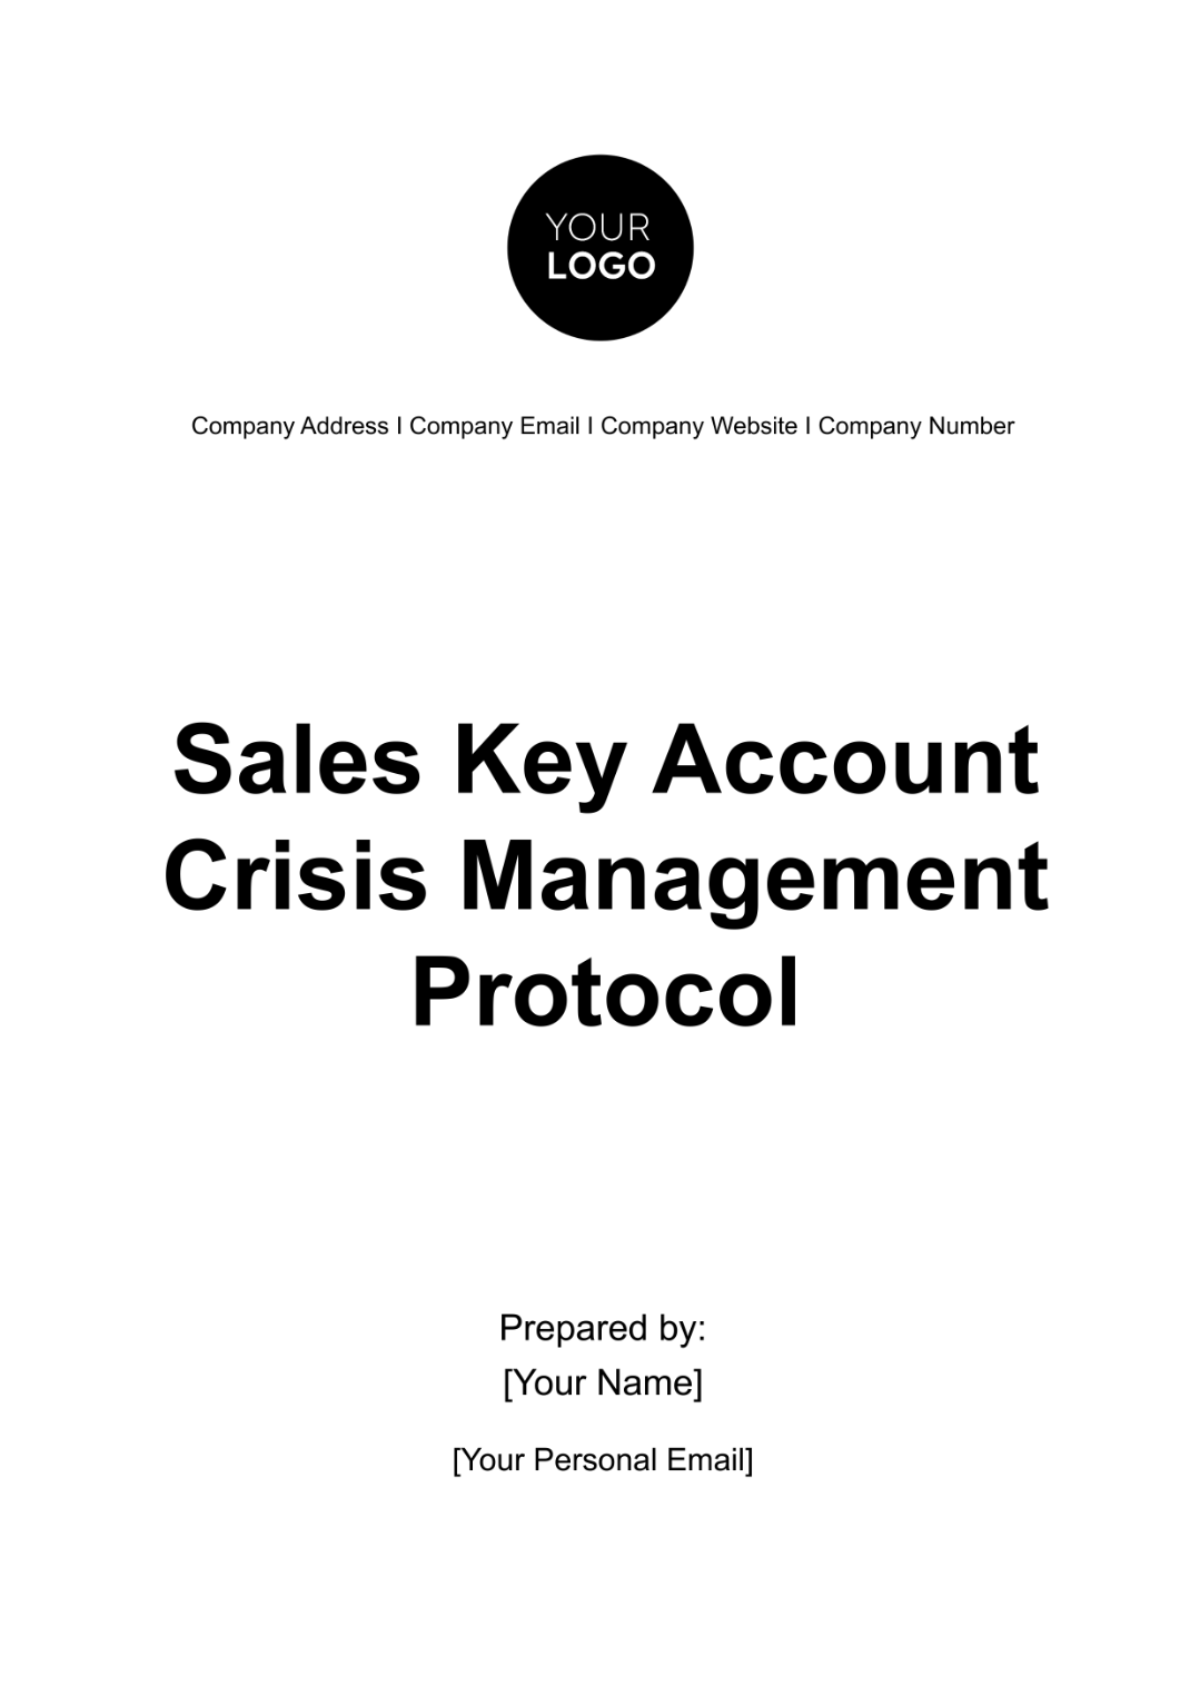 Sales Key Account Crisis Management Protocol Template